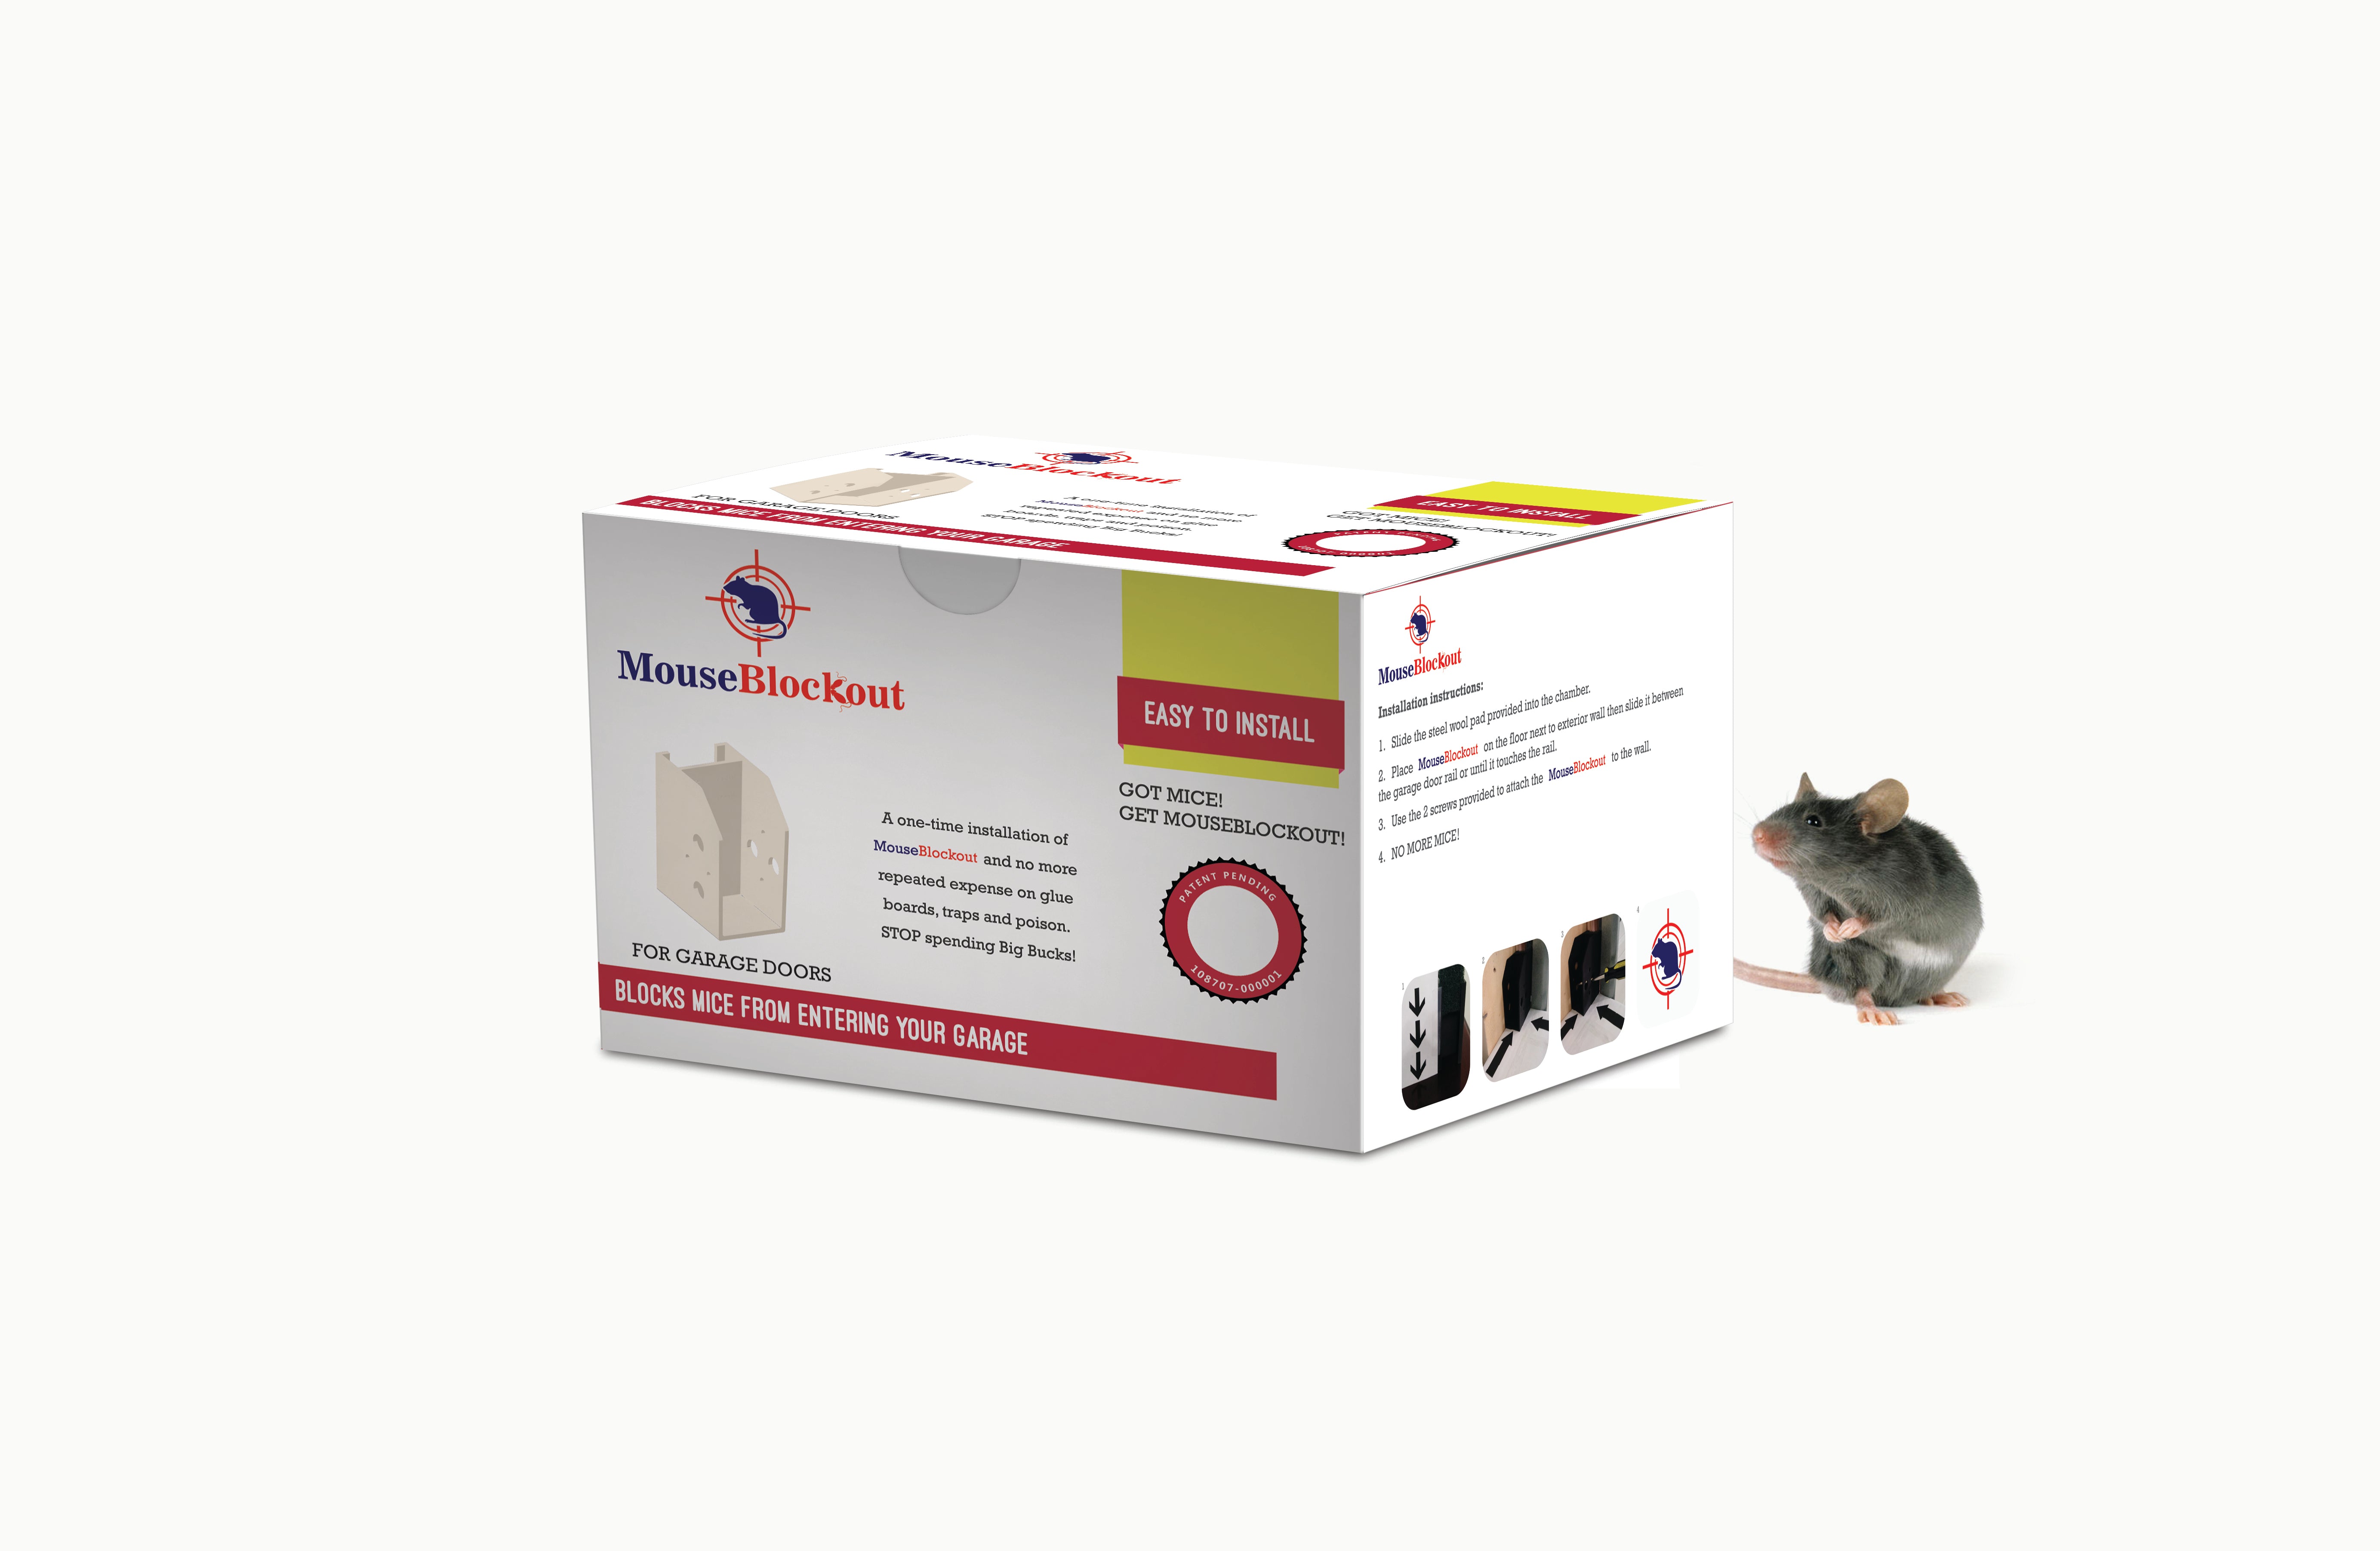 Mouse repellent for garage doors – Mouseblockout